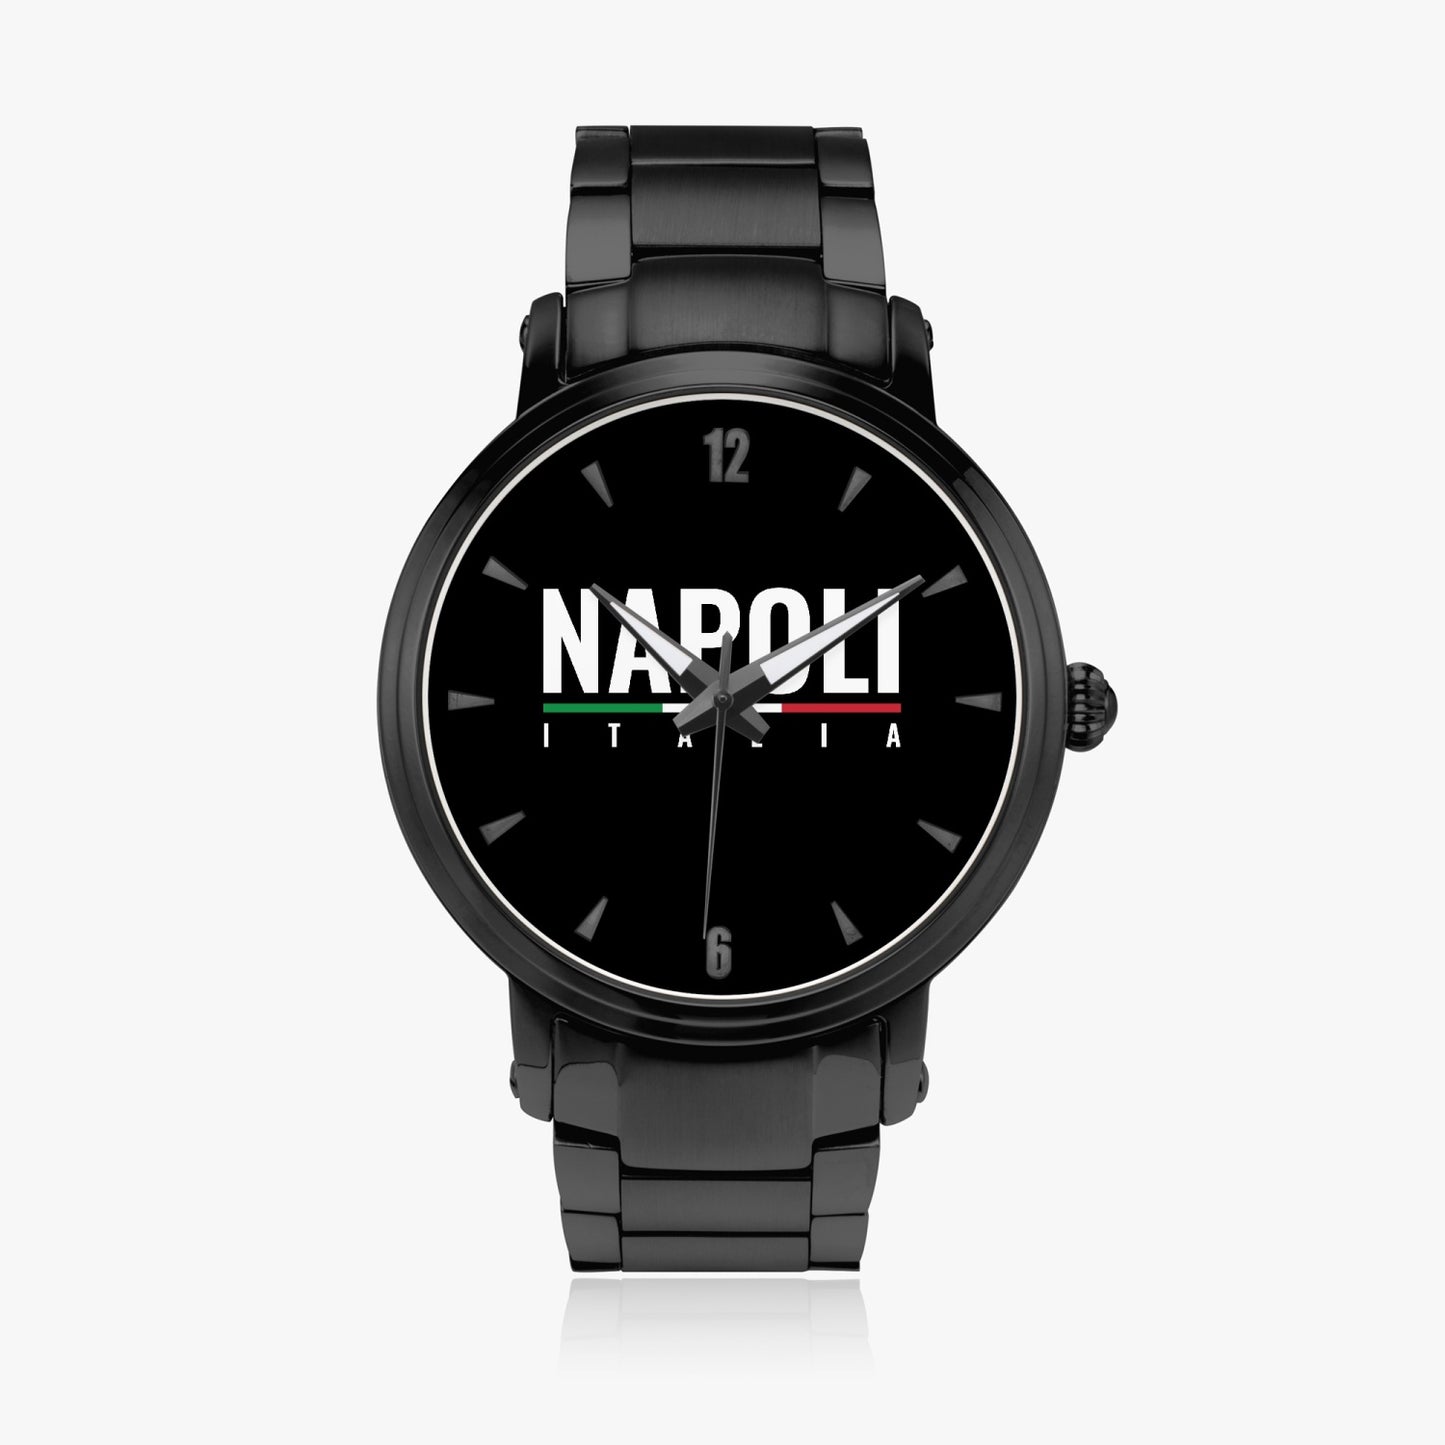 Napoli Italia Automatic Movement Watch - Premium Stainless Steel